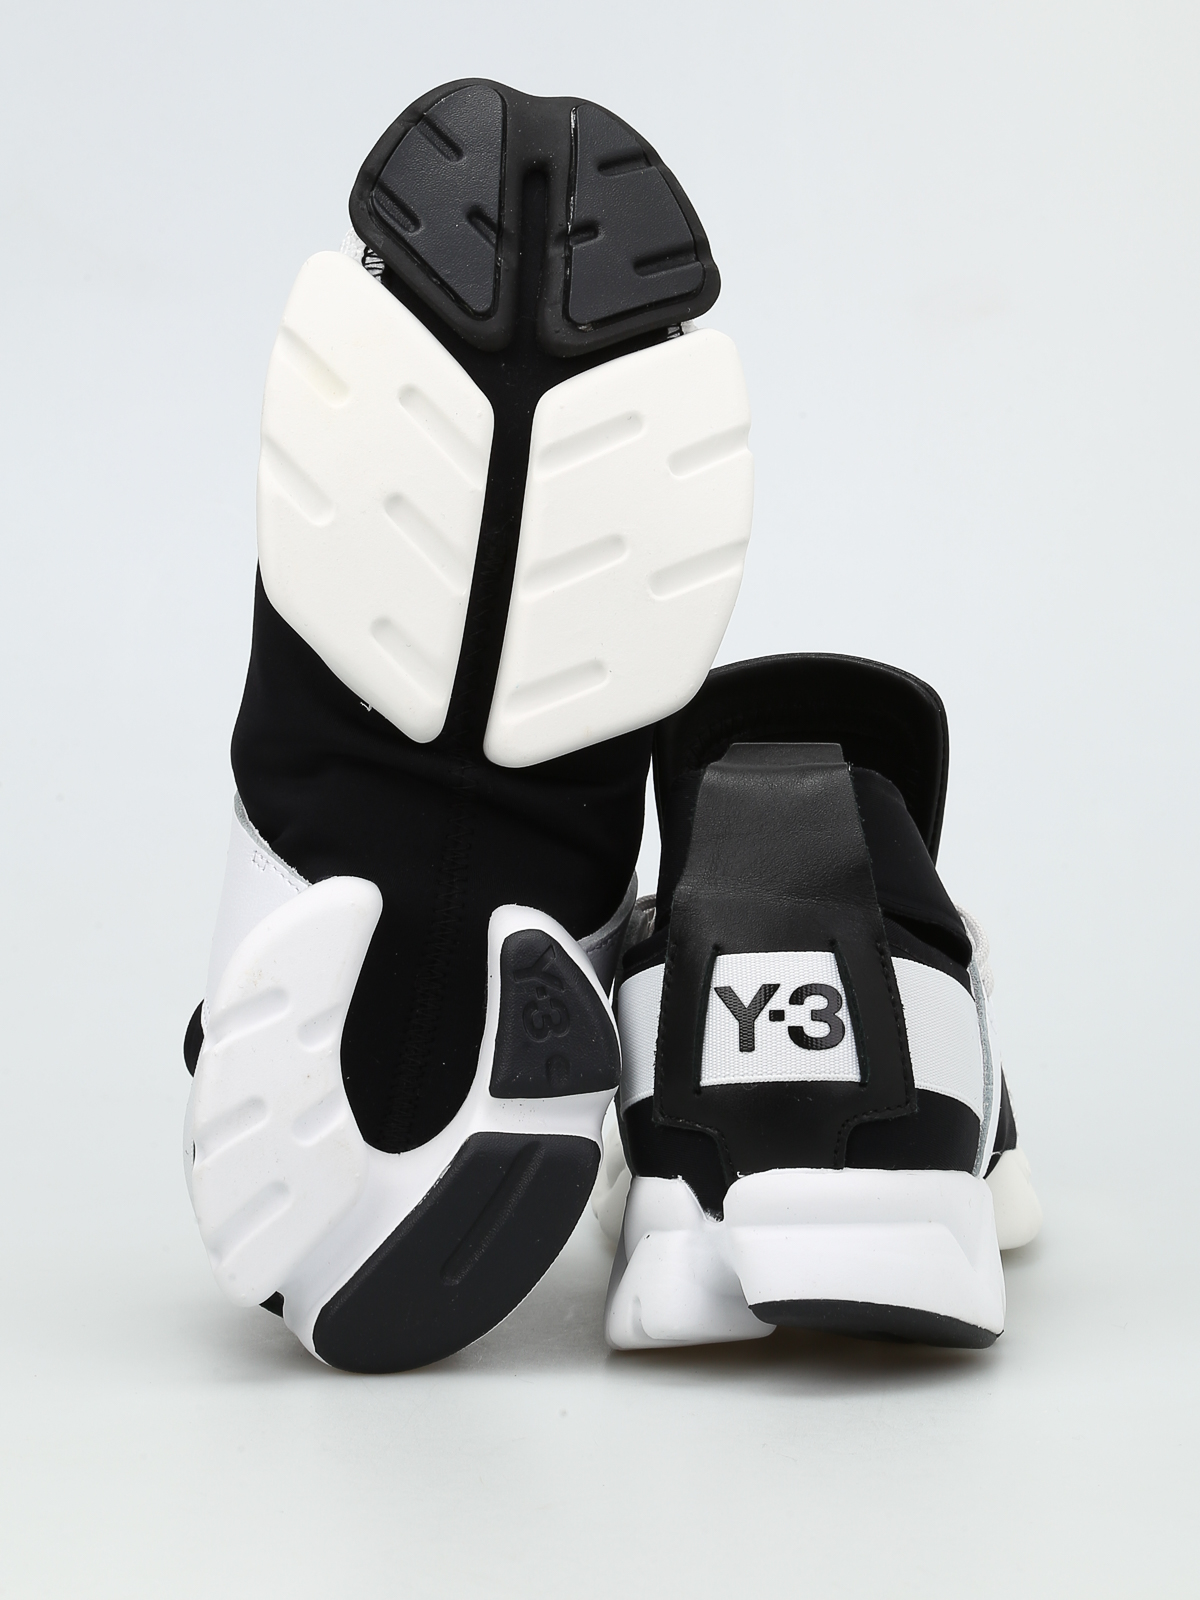 tieners haat richting Trainers Adidas Y-3 - Kydo sport style sneakers - S82165